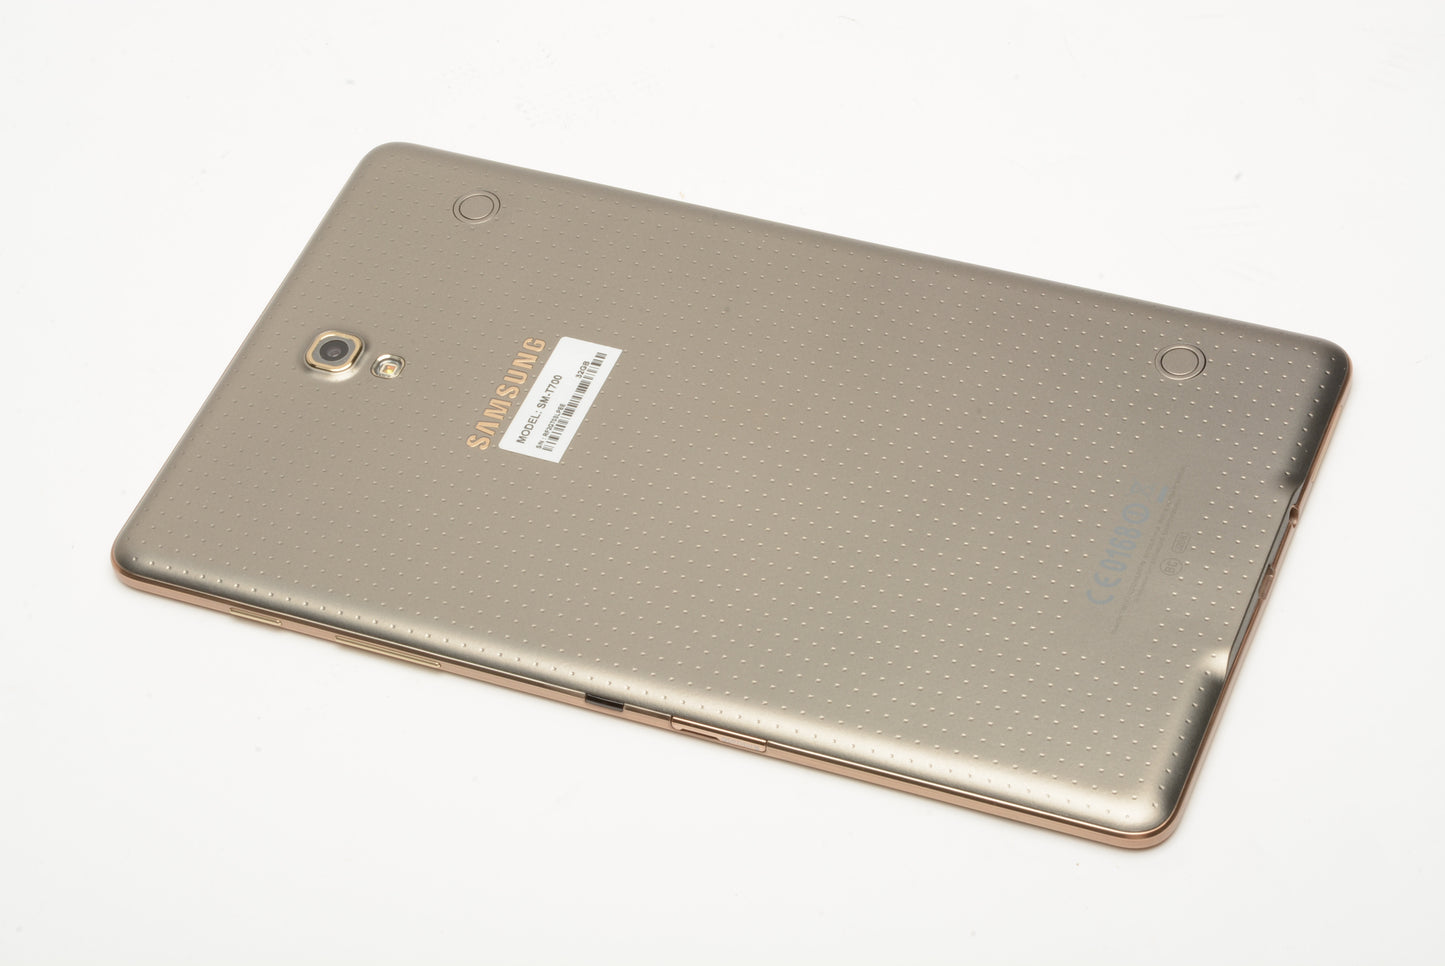 Samsung Galaxy Tab S SM-T700 16GB Titanium Gold WI-FI 8.4" Tablet + 2 covers